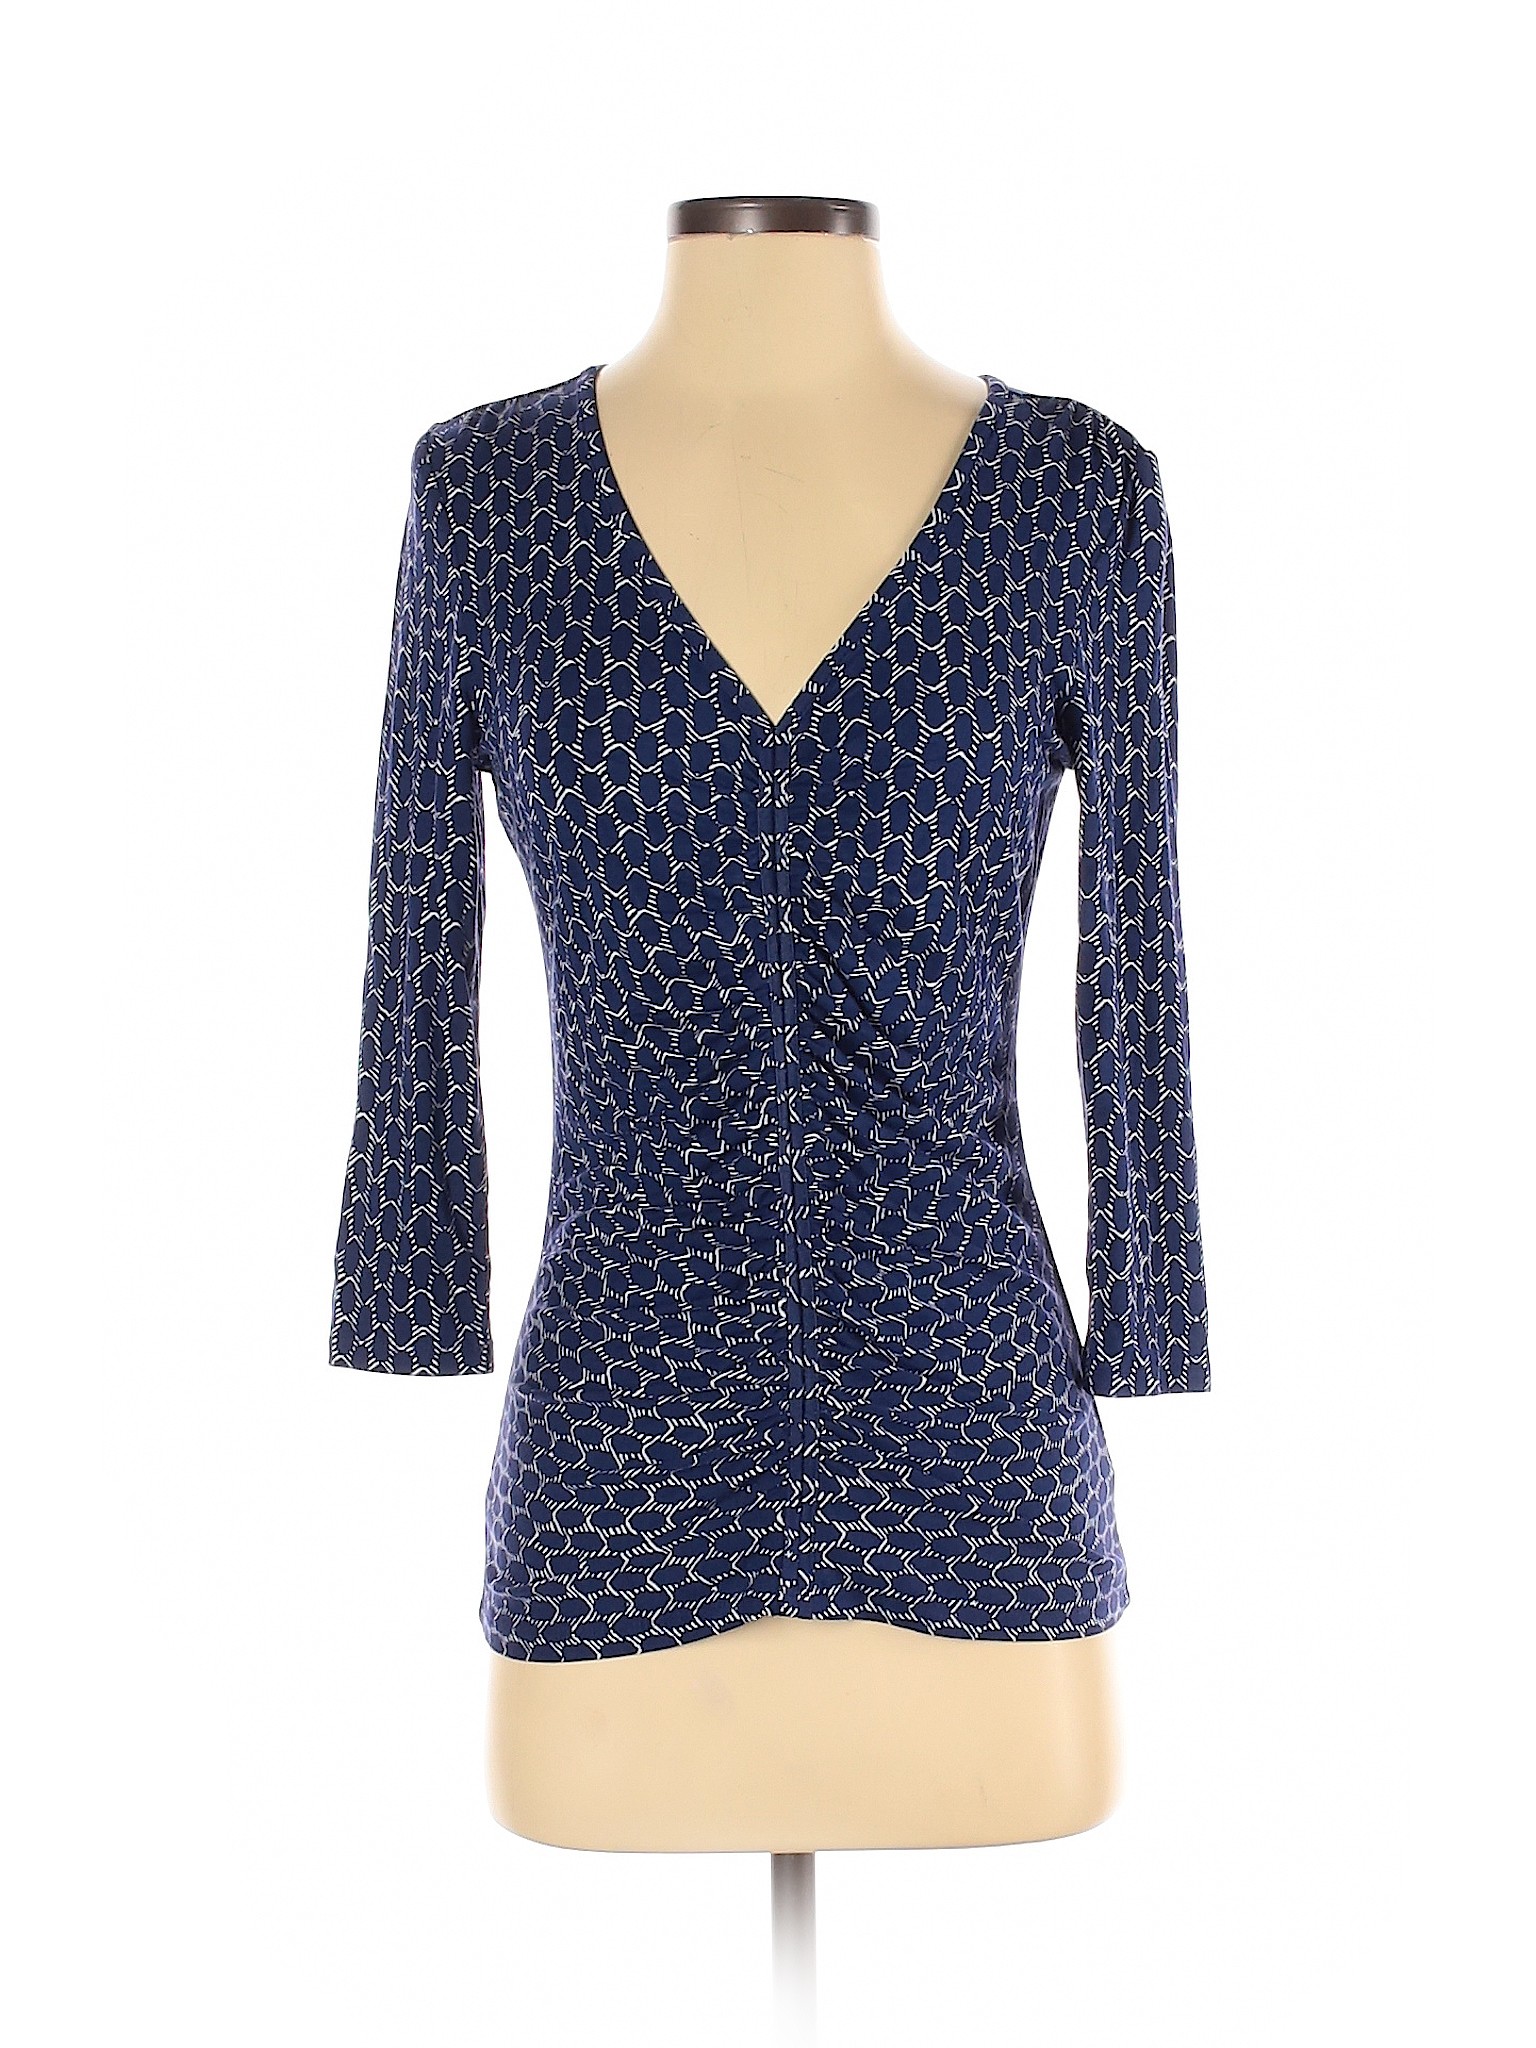 Adrianna Papell Women Blue 3/4 Sleeve Top S | eBay